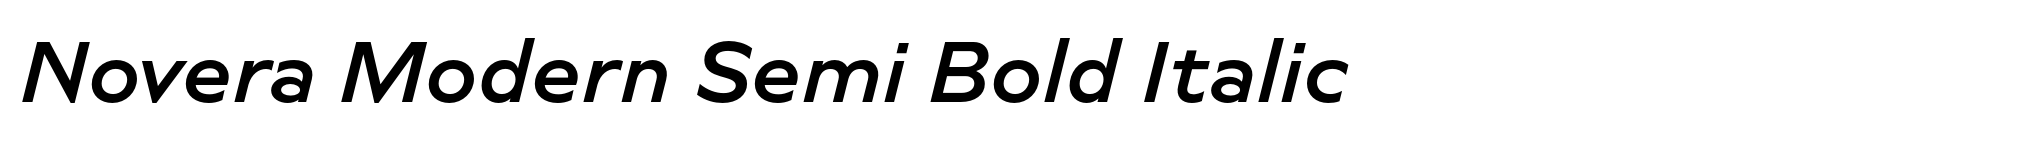 Novera Modern Semi Bold Italic image